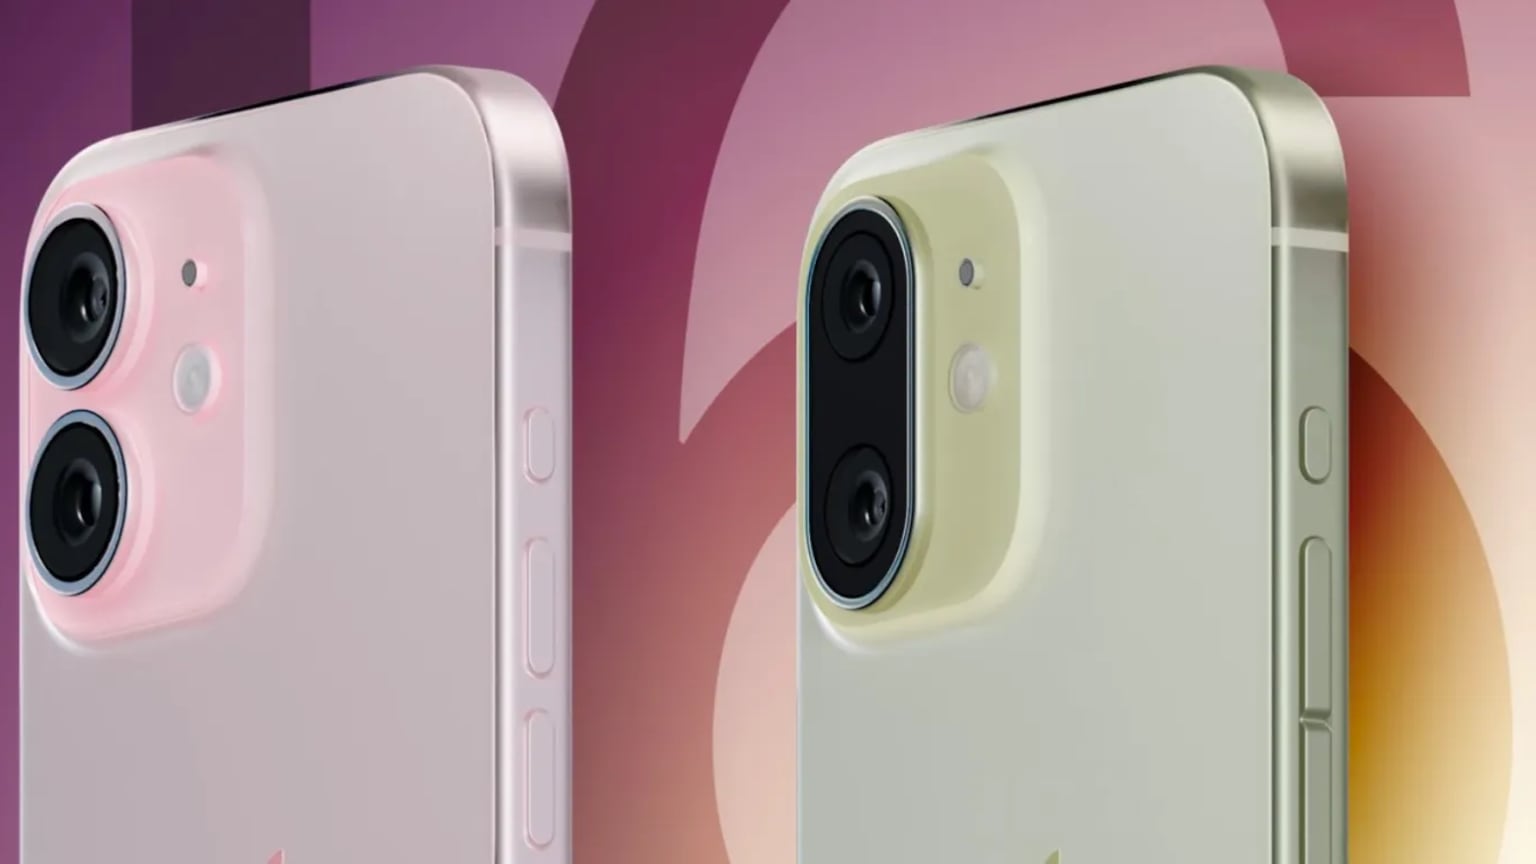 Imagen conceptual del iPhone 16 con cámara de alineación vertical como un Android.